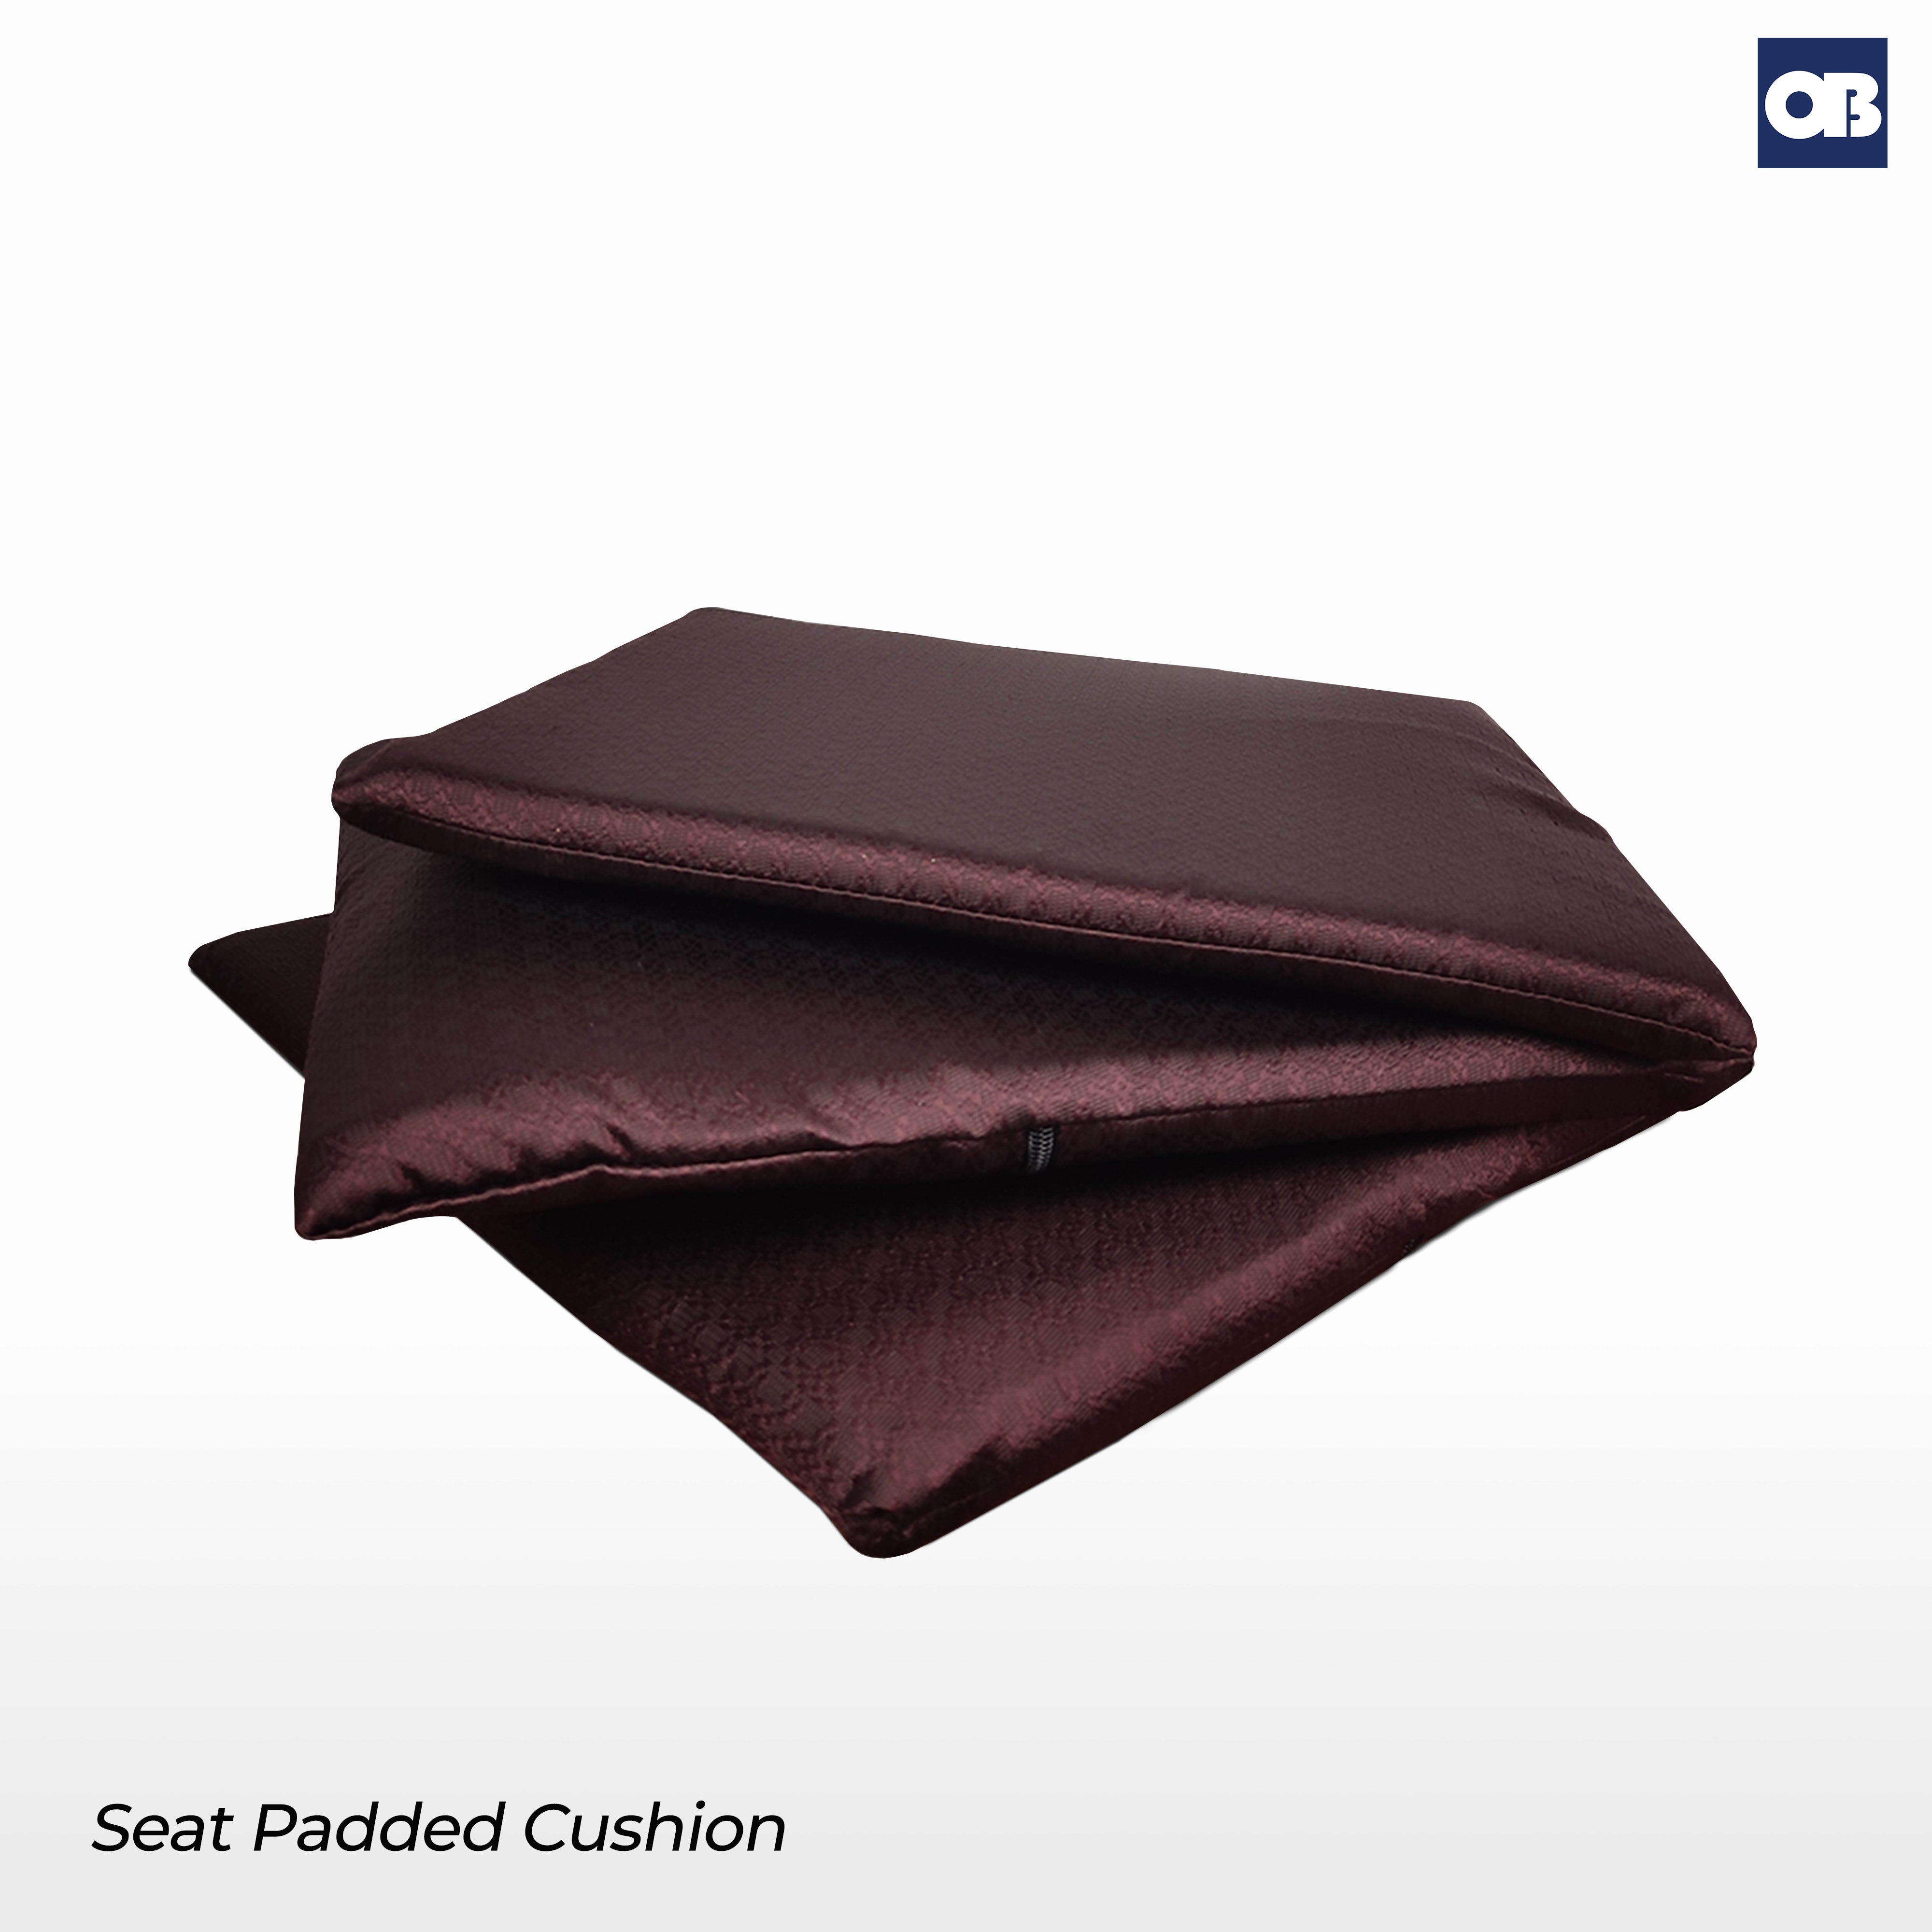 OB Seat Padded Cushion